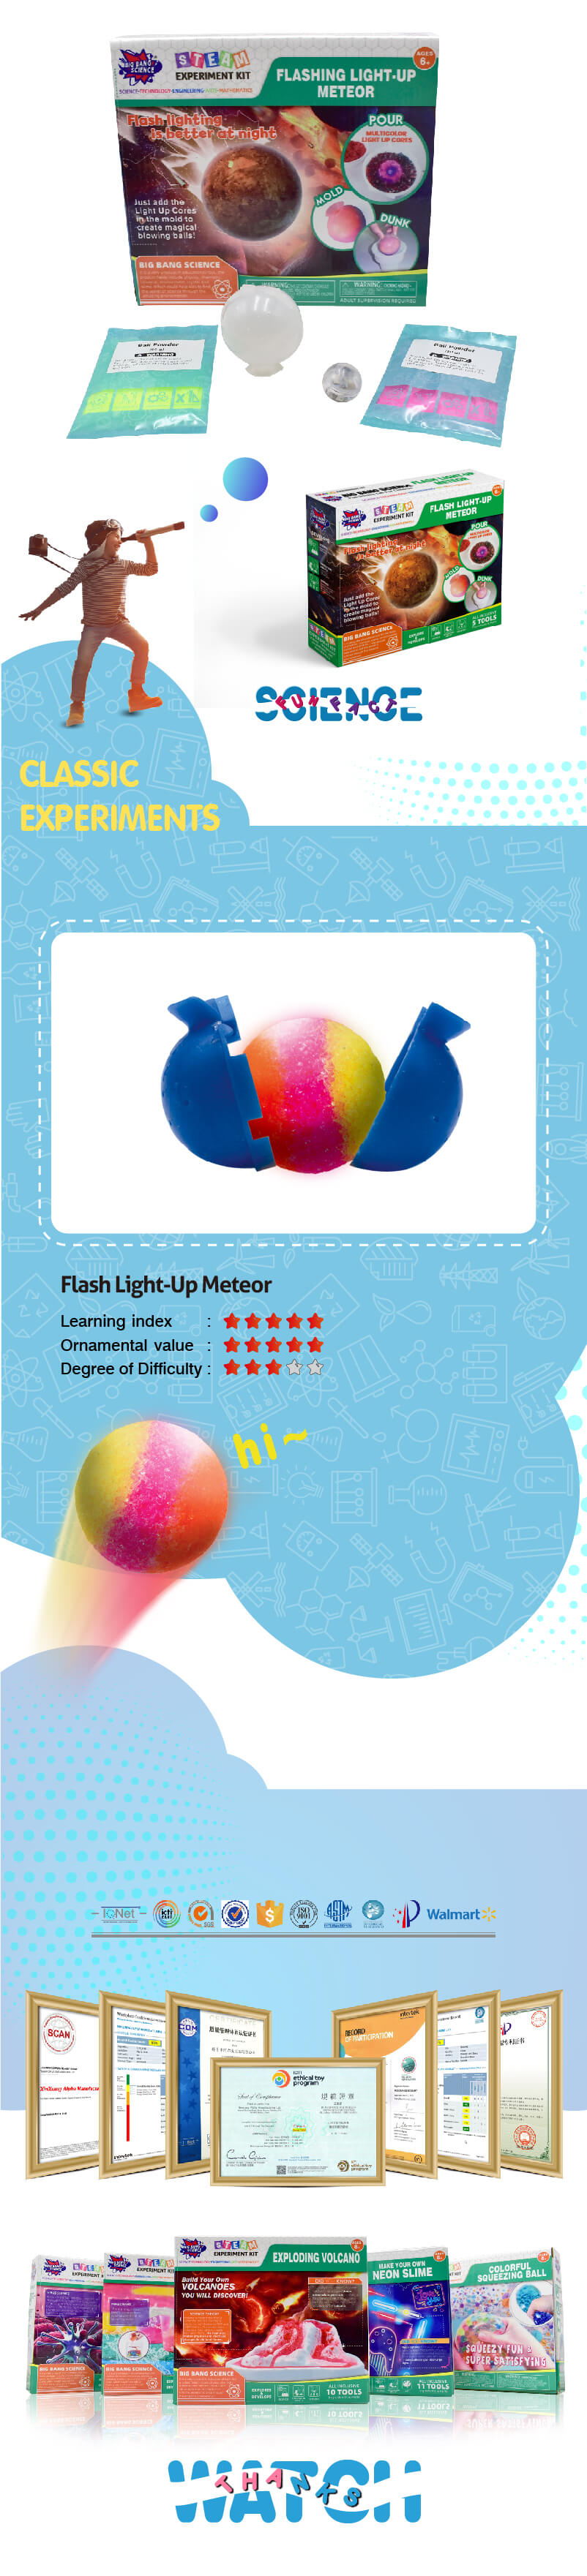 SS-190211M Flash Light-Up Meteor-glow balls